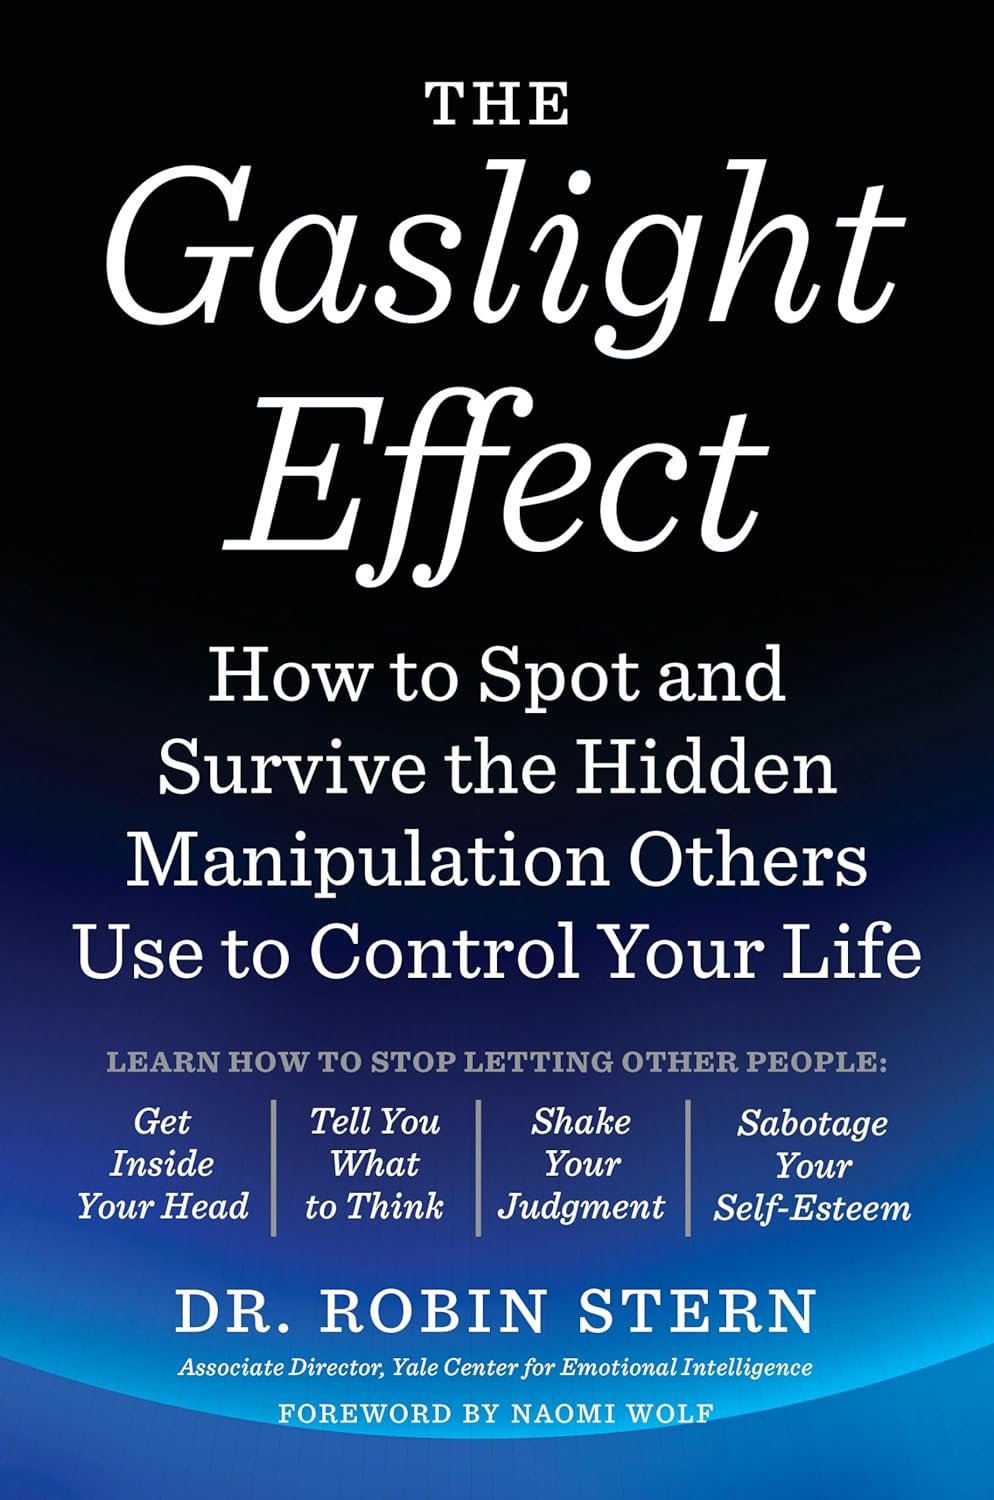 Book2_The-Gaslight-Effect-How-to-Spot-and-Survive-Hidden-Manipulation.jpg